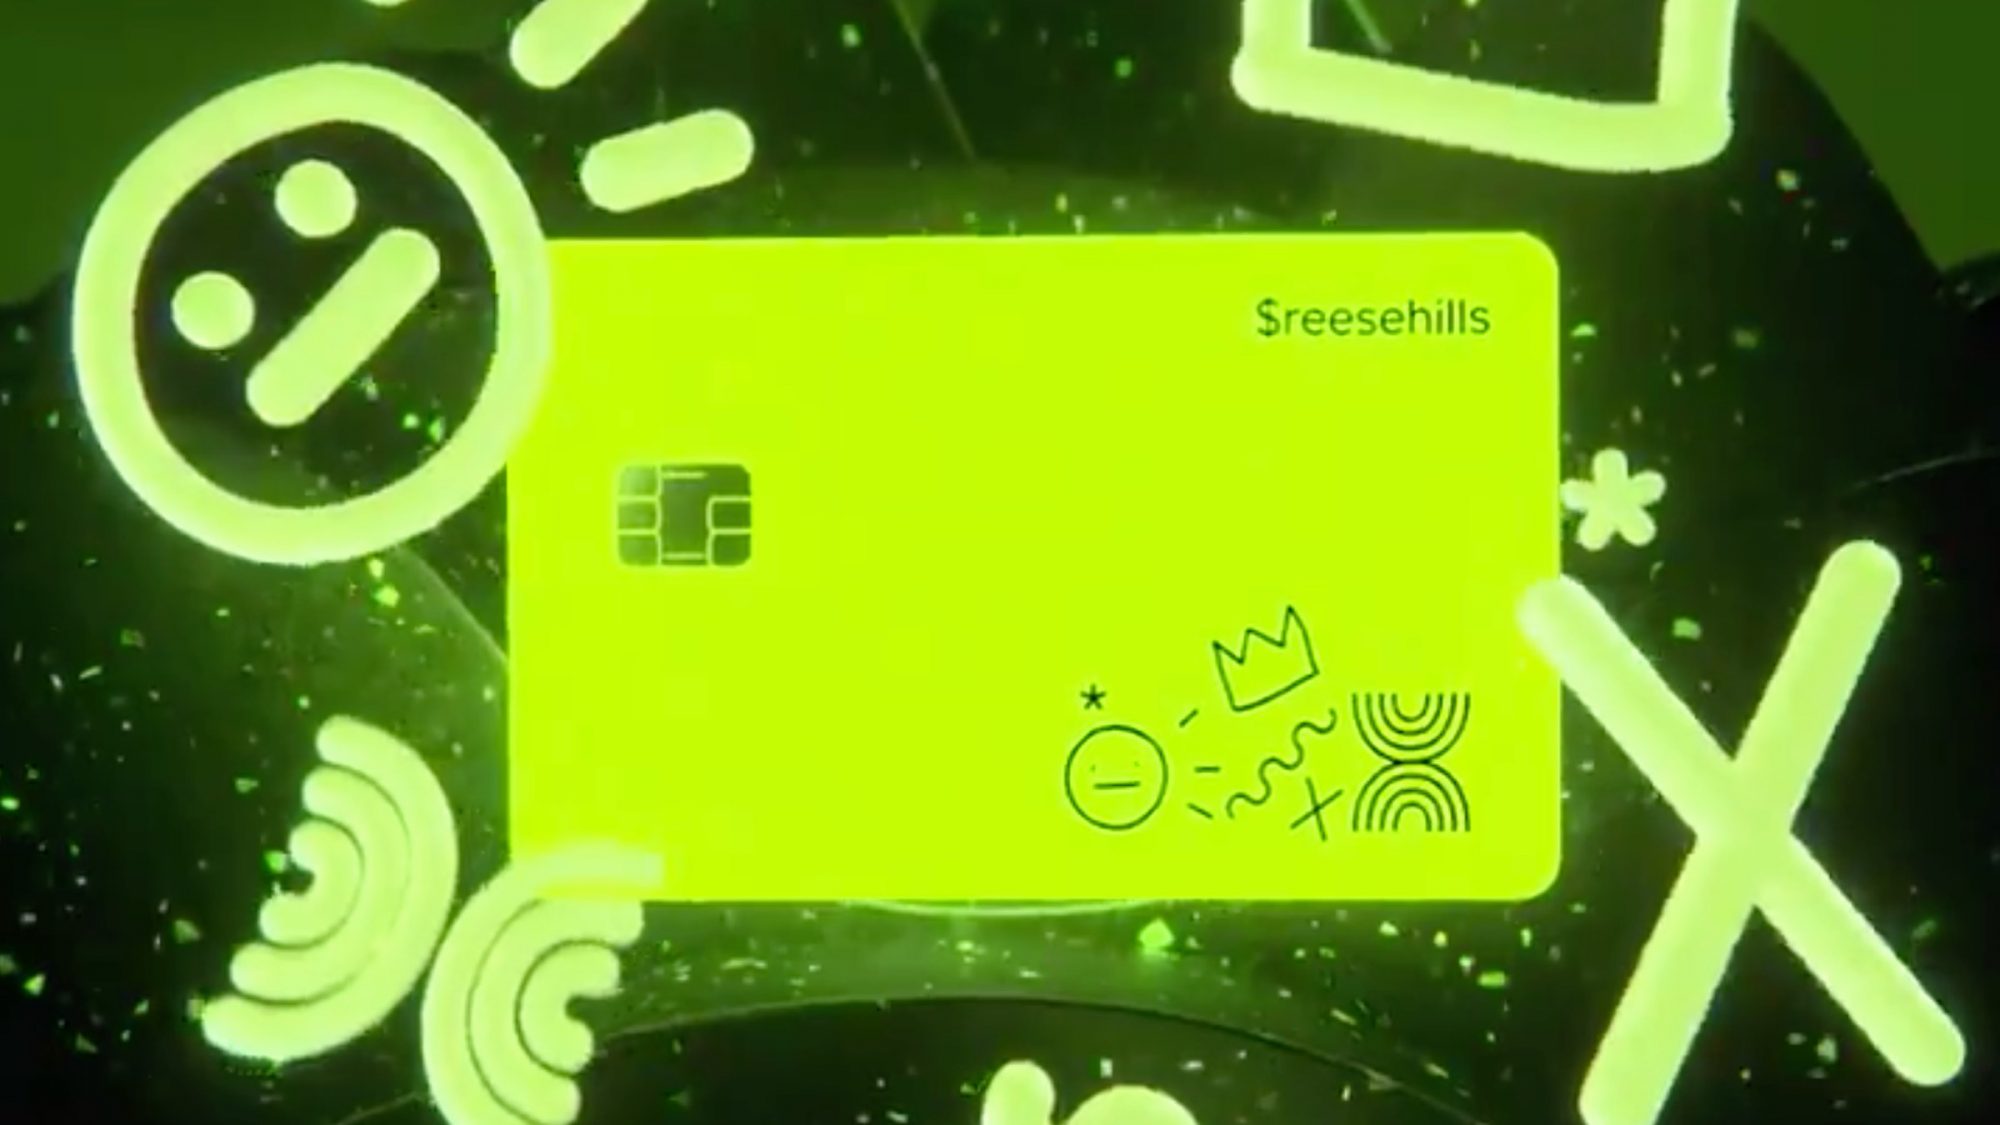 Square glow in the dark Cash Card